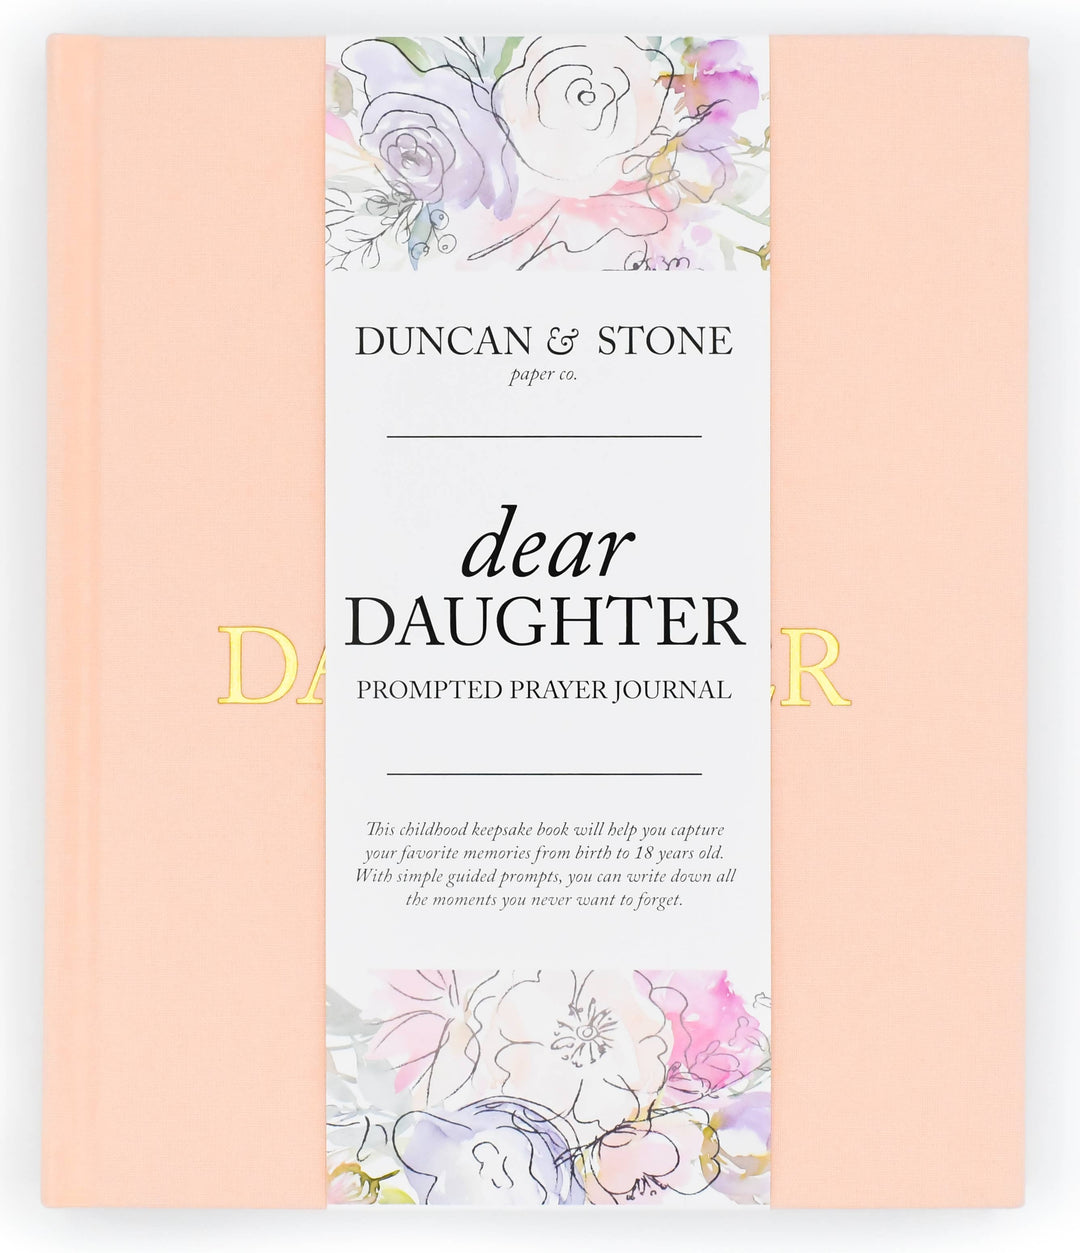 Duncan & Stone Paper Co. - Dear Daughter: Prompted Prayer Journal & Childhood Keepsake